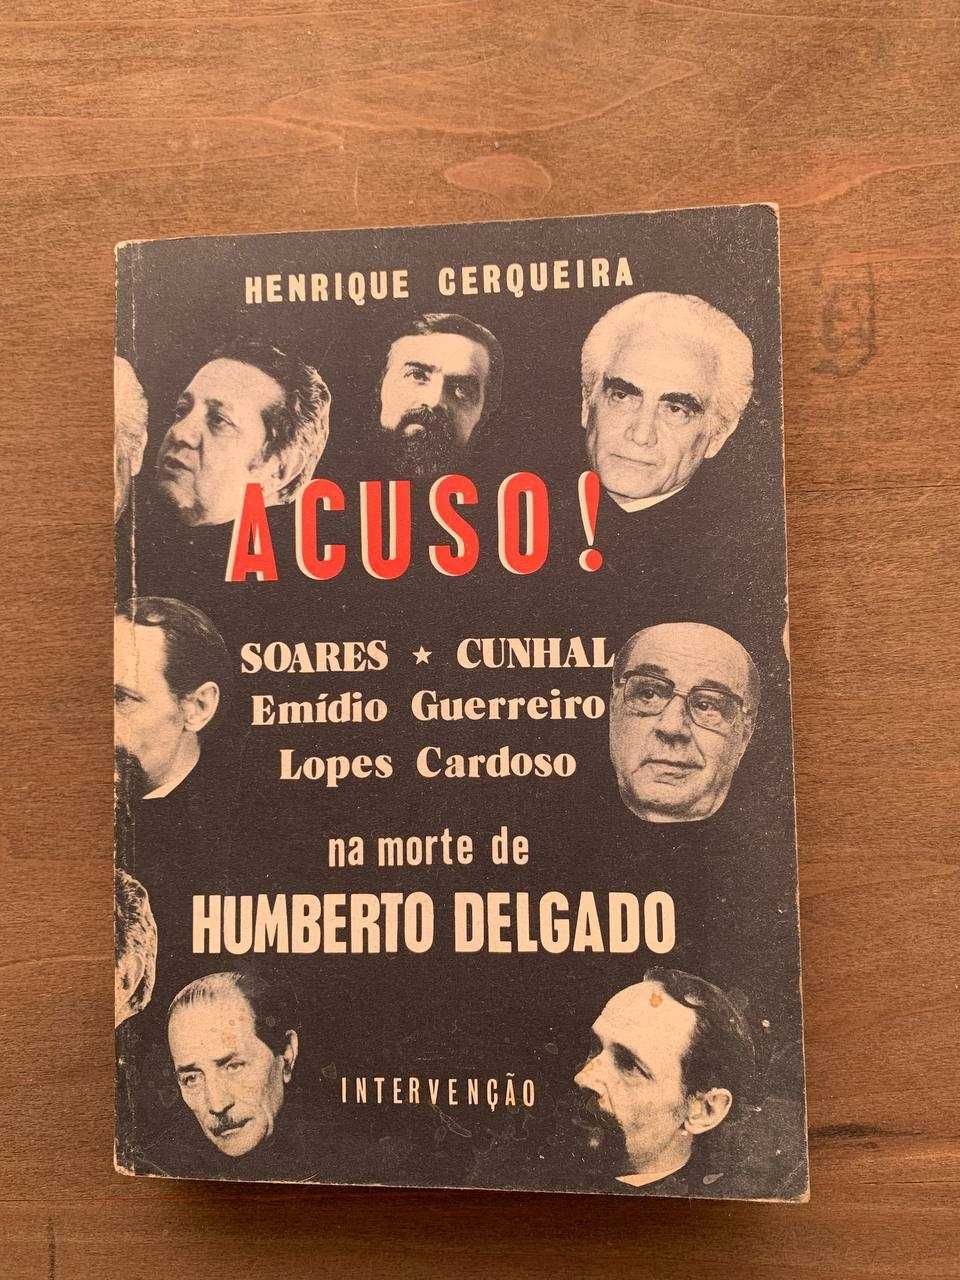 Henrique Cerqueira - Acuso!